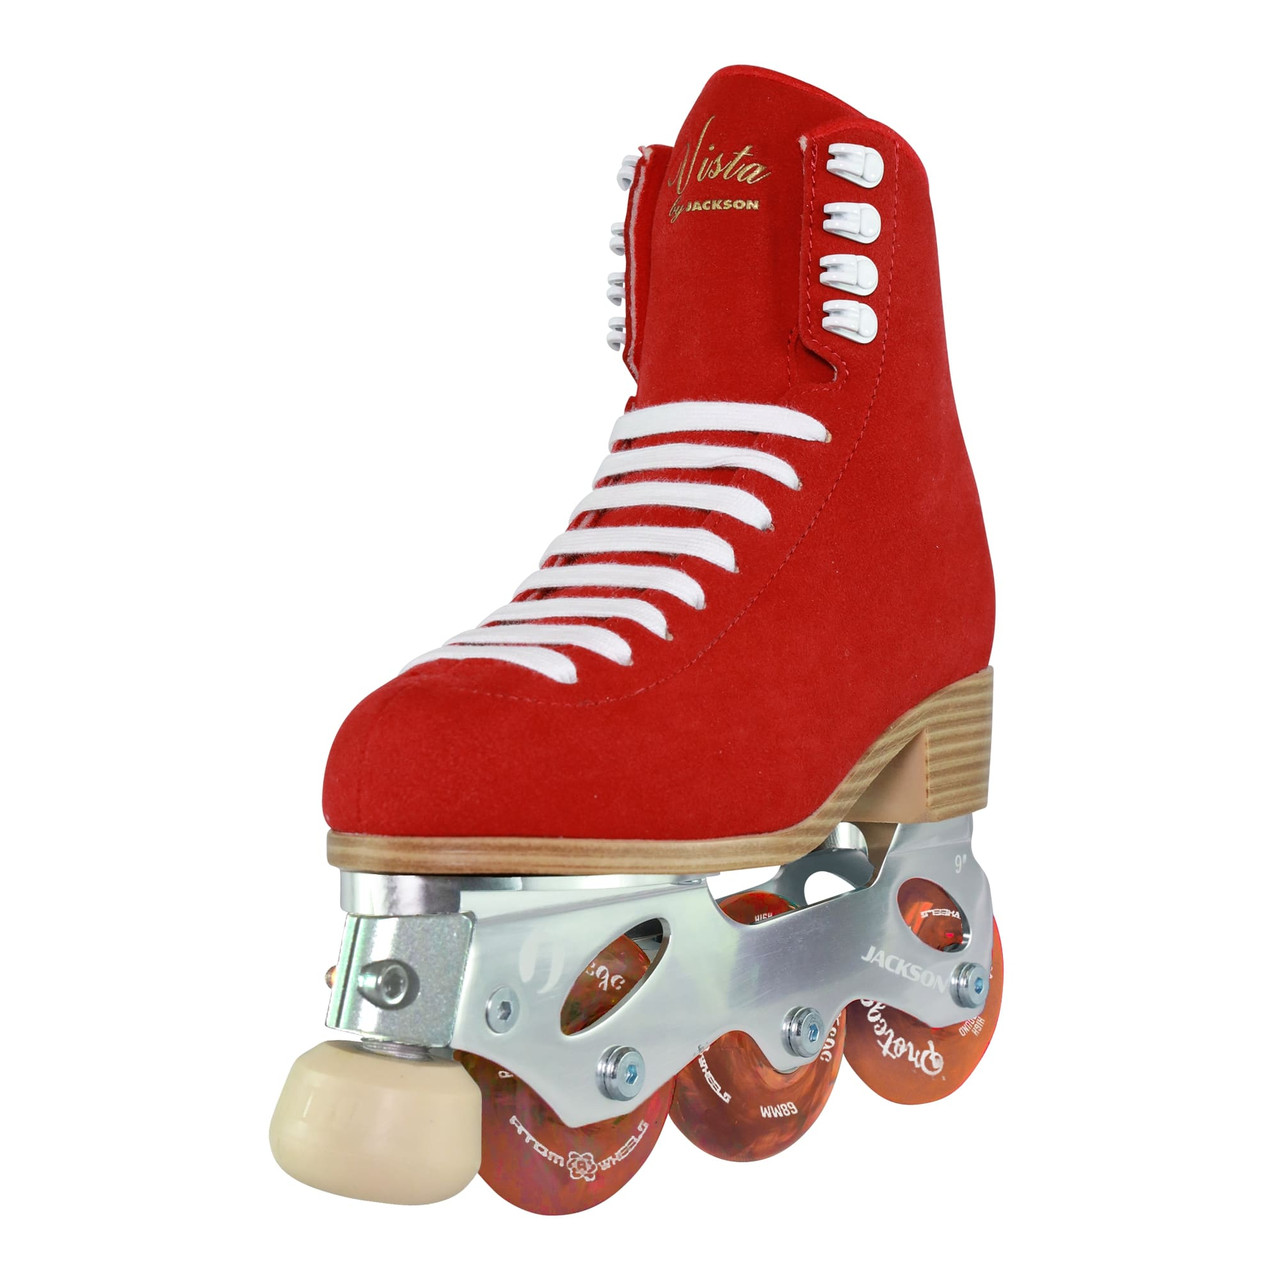 Jackson Atom Inline Roller Skates